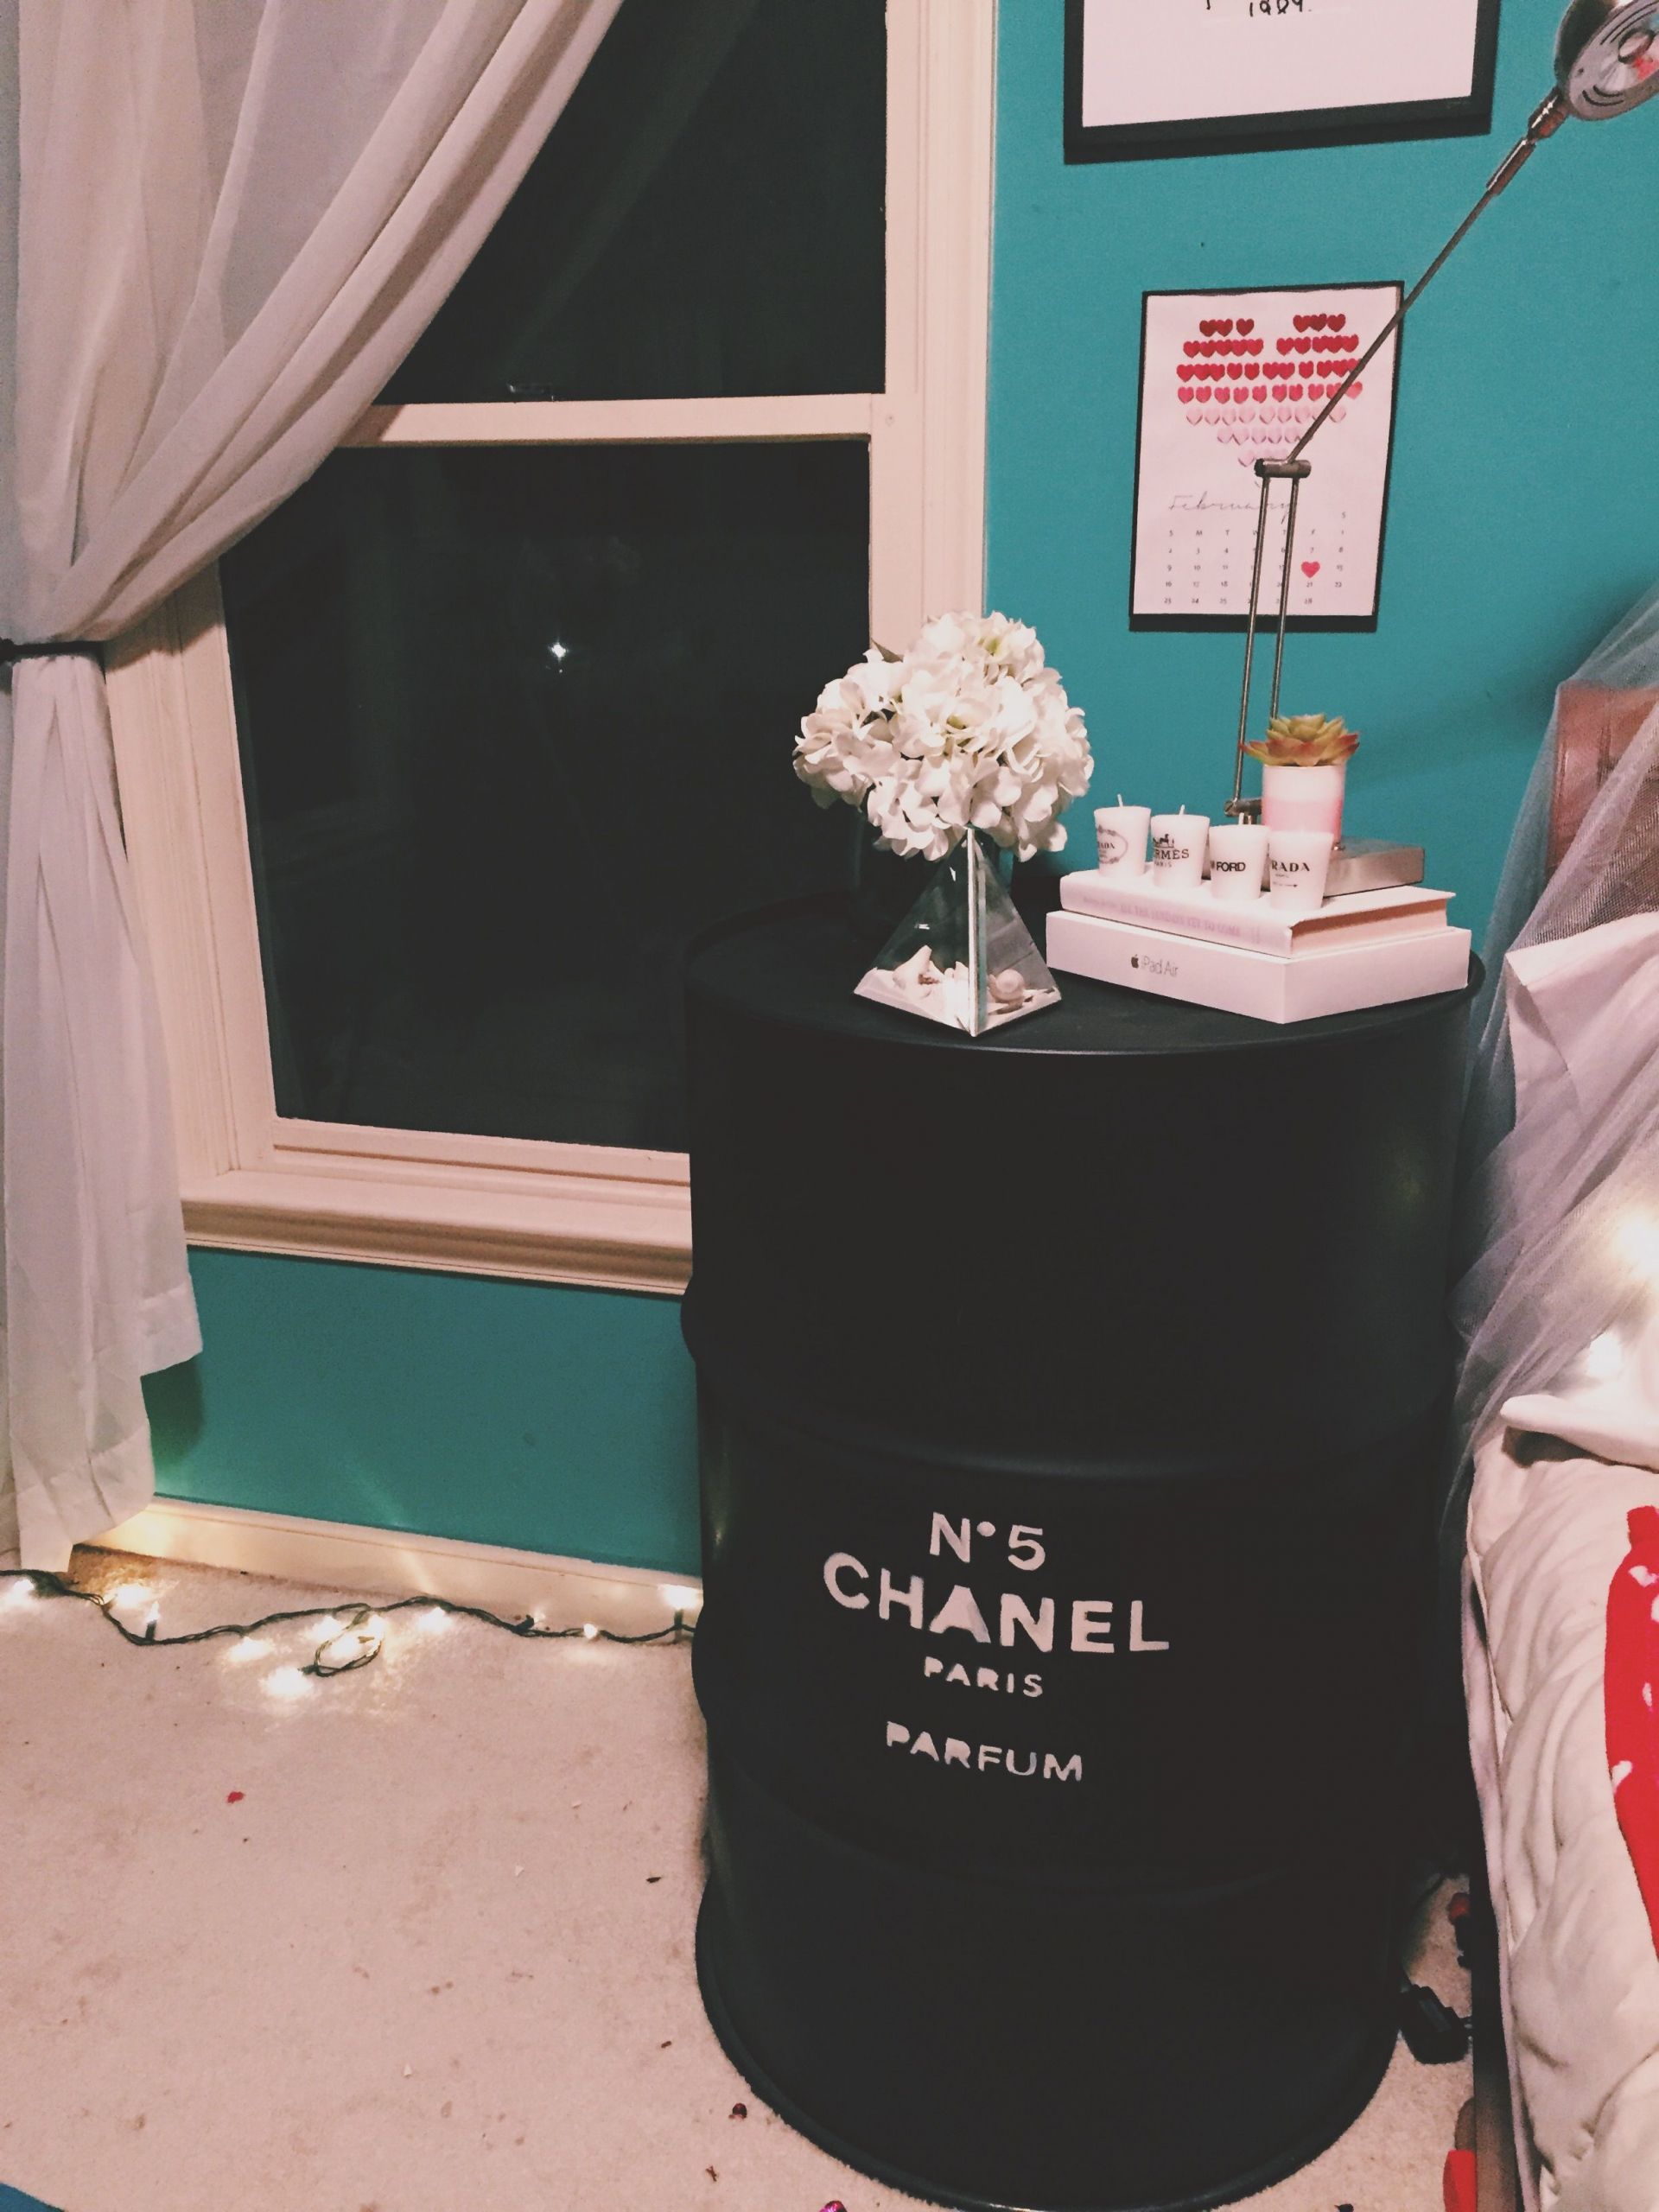 DIY Chanel Room Decor
 DIY chanel night stand tumblr inspired room decor DIY